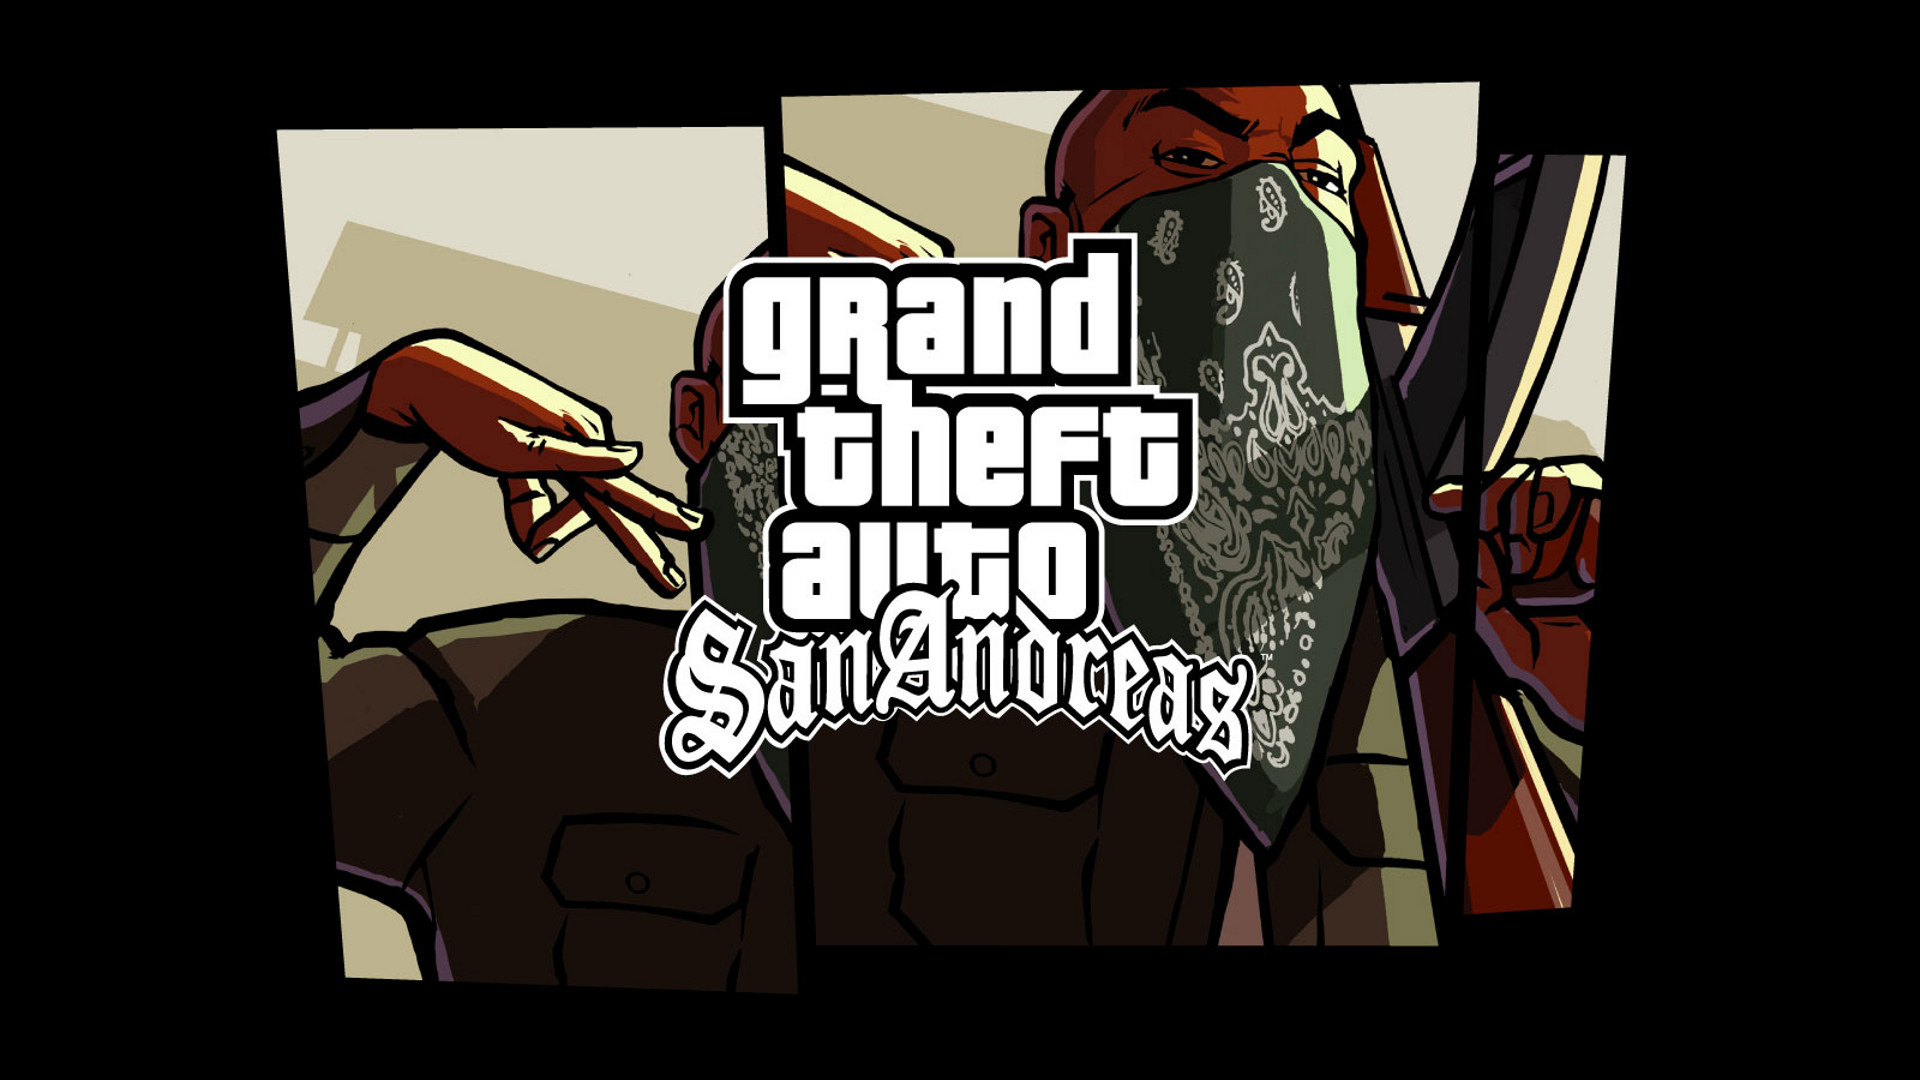 Image 3 - GTA SA First Person Shooter mod for Grand Theft Auto: San Andreas  - ModDB